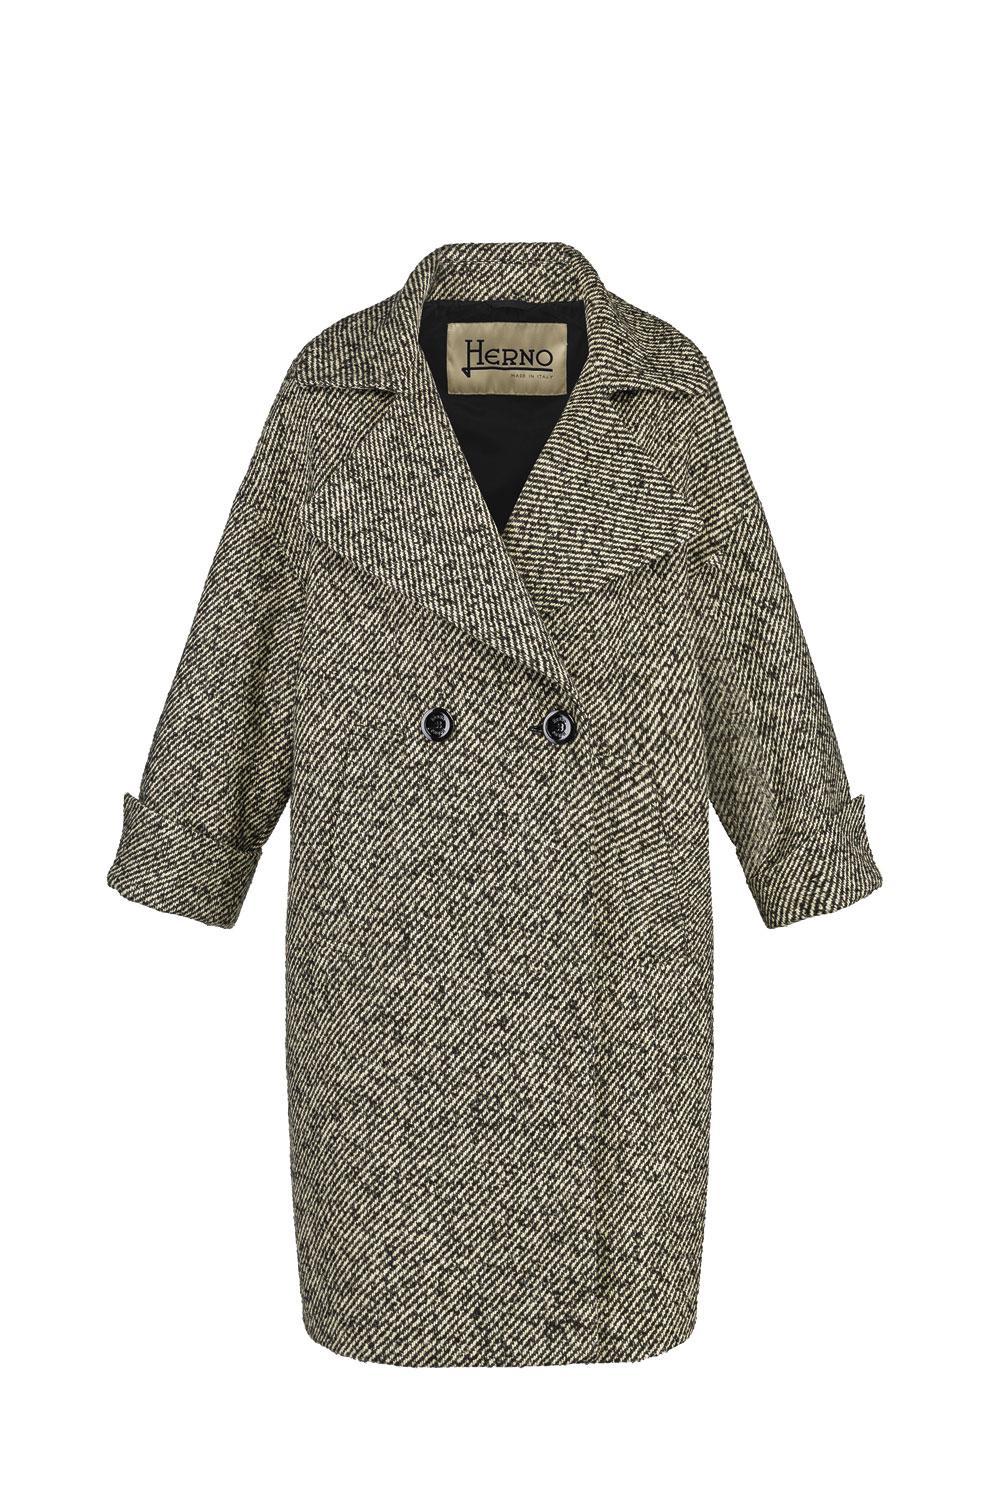 Manteau en laine, Herno, 660 euros